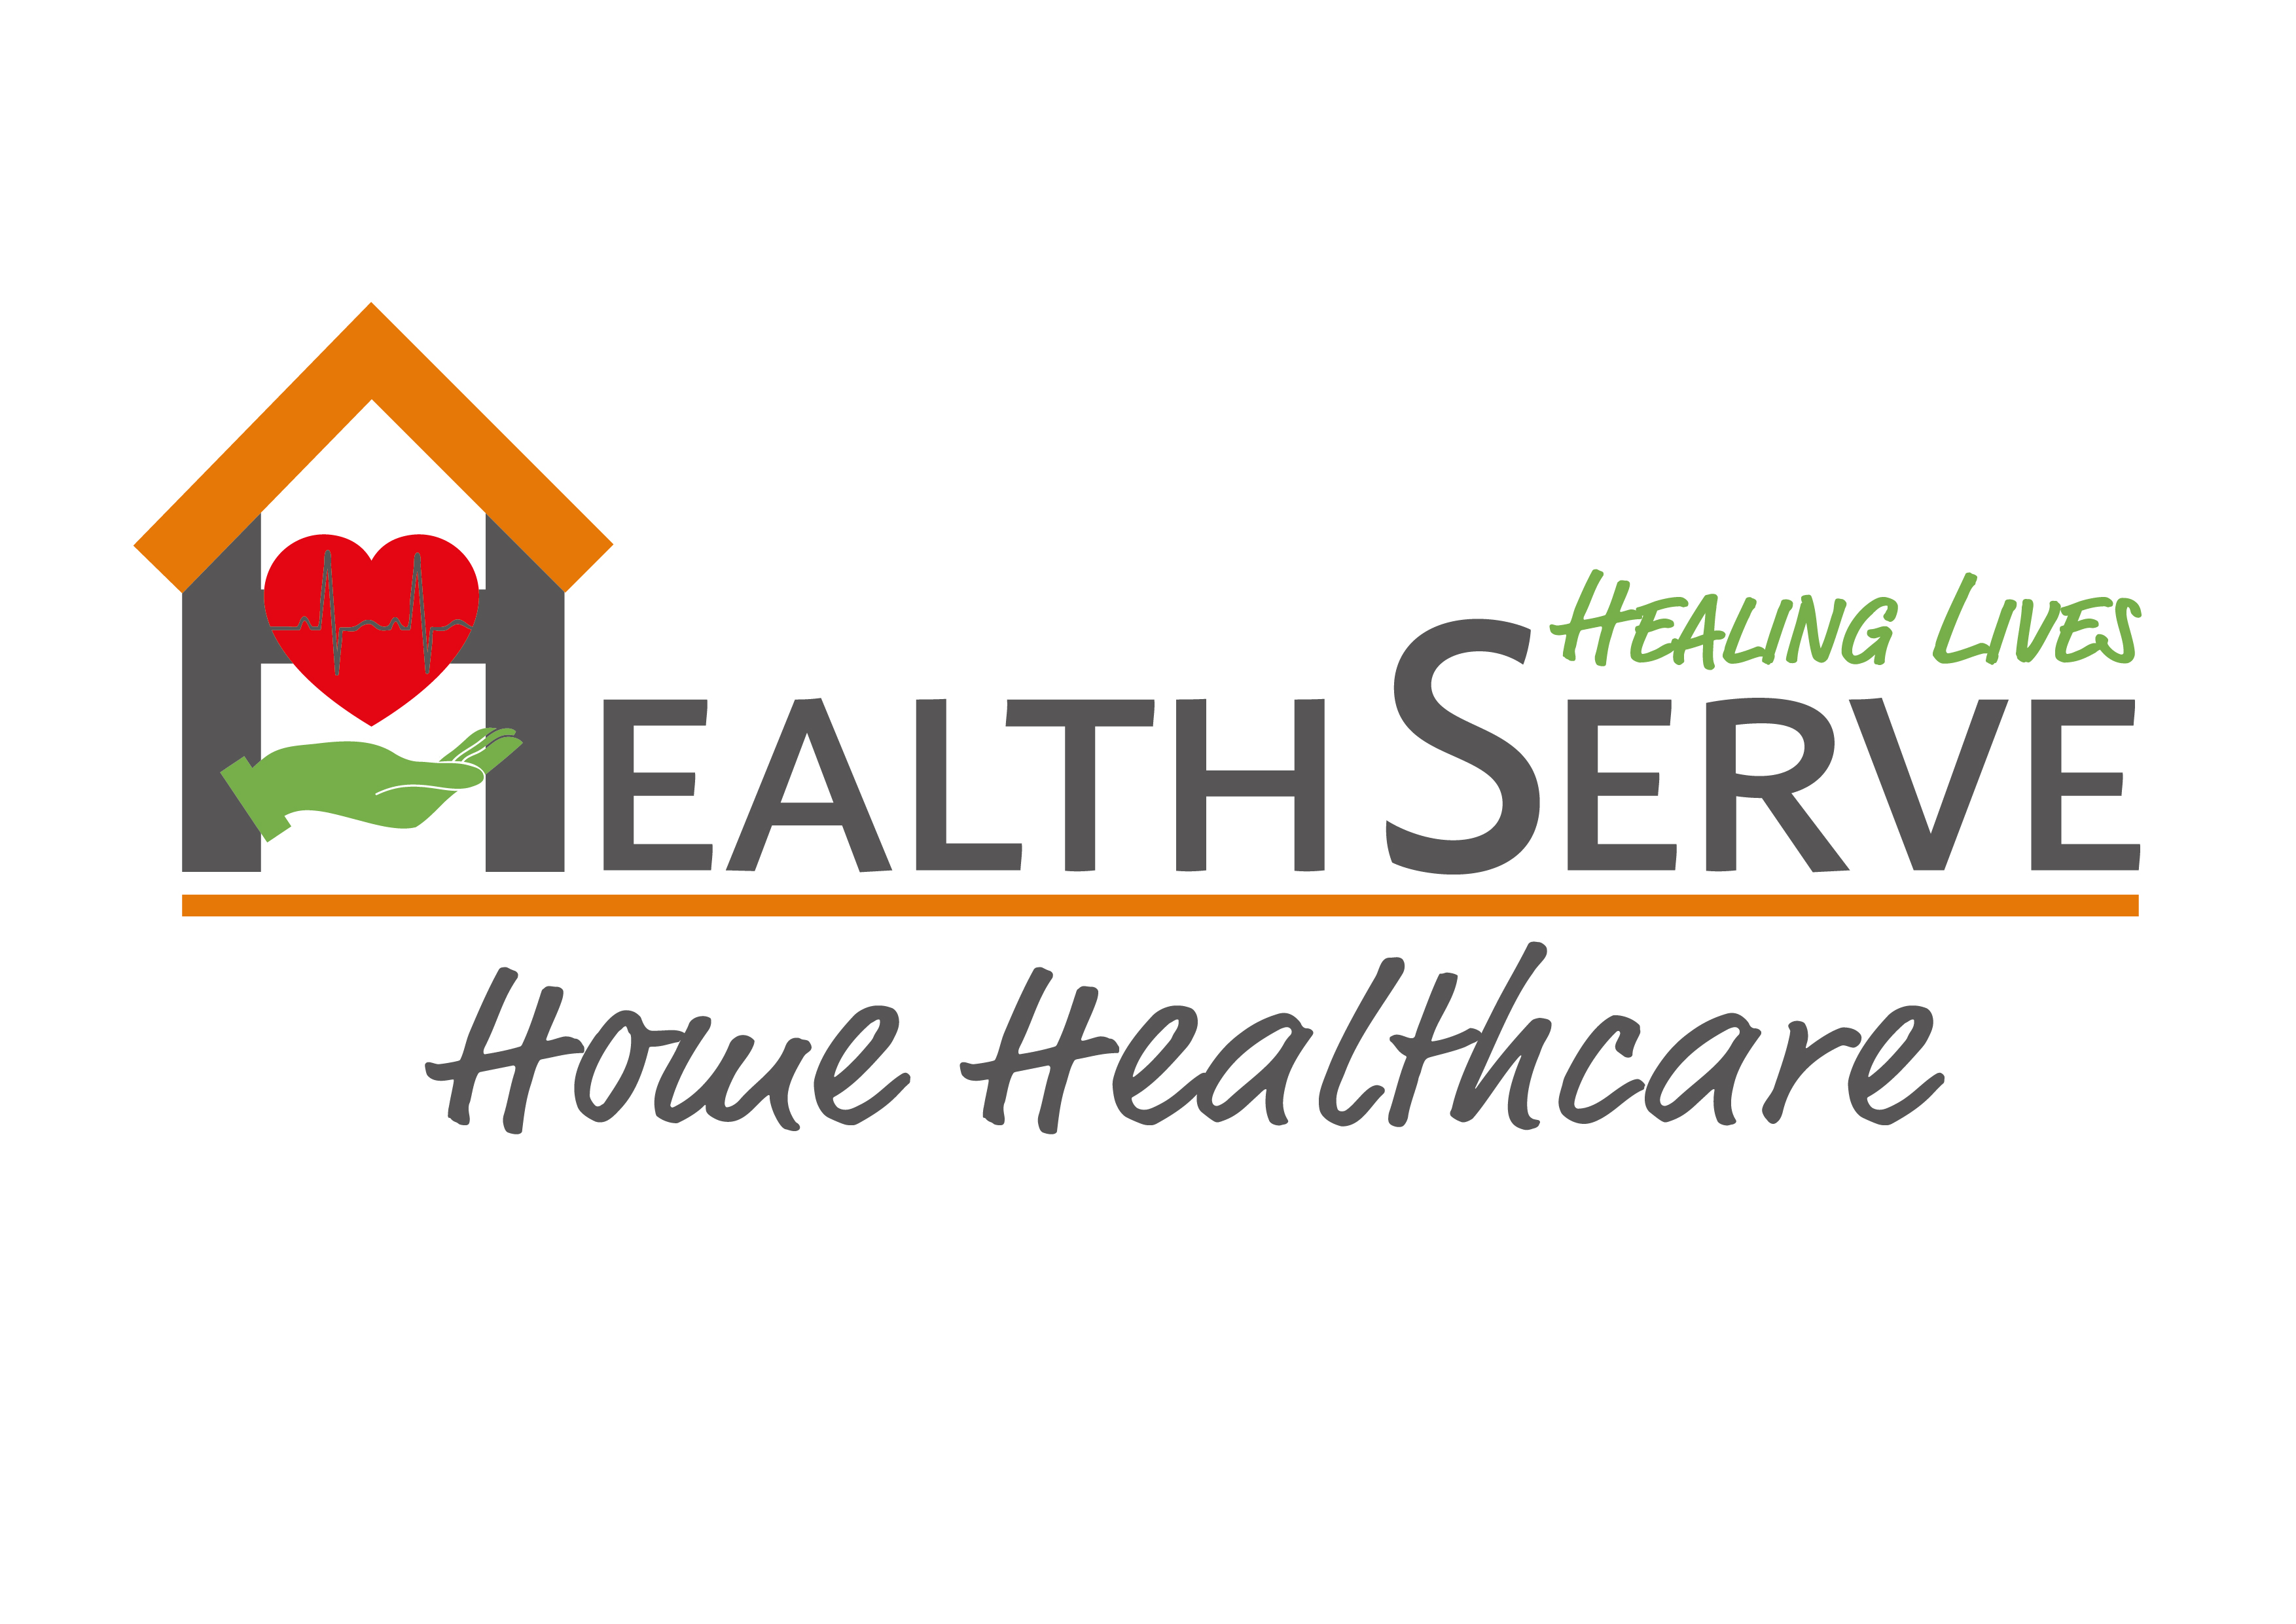 Healthserve Home Healthcare